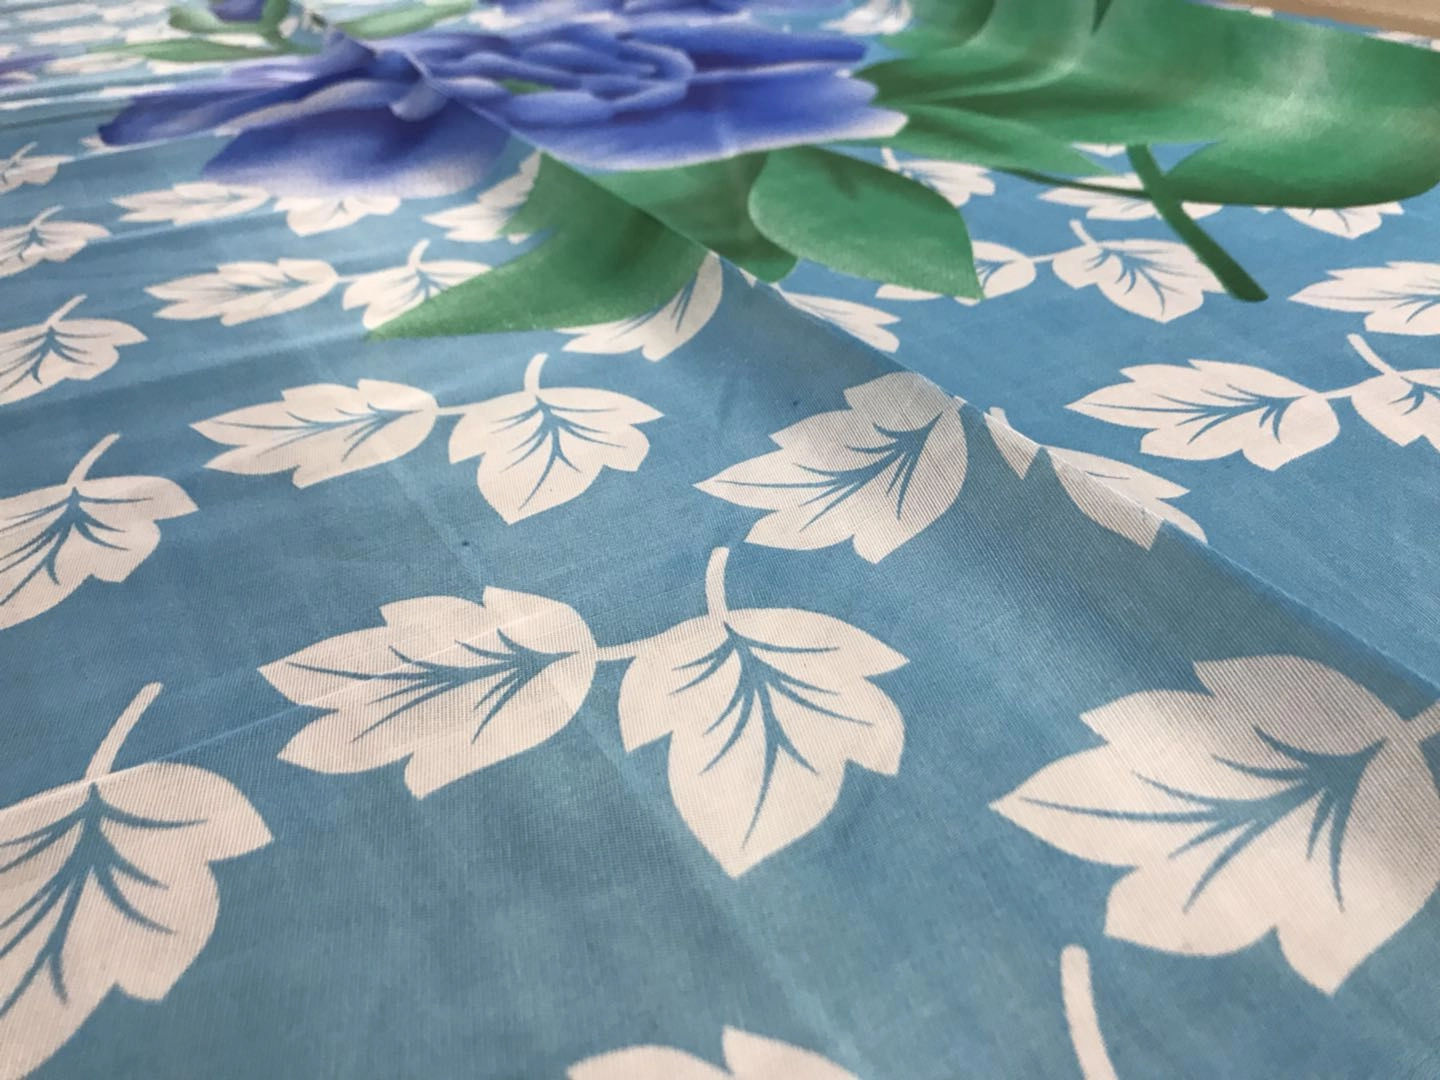 China China supplier cheapest mattress fabric manufacturer